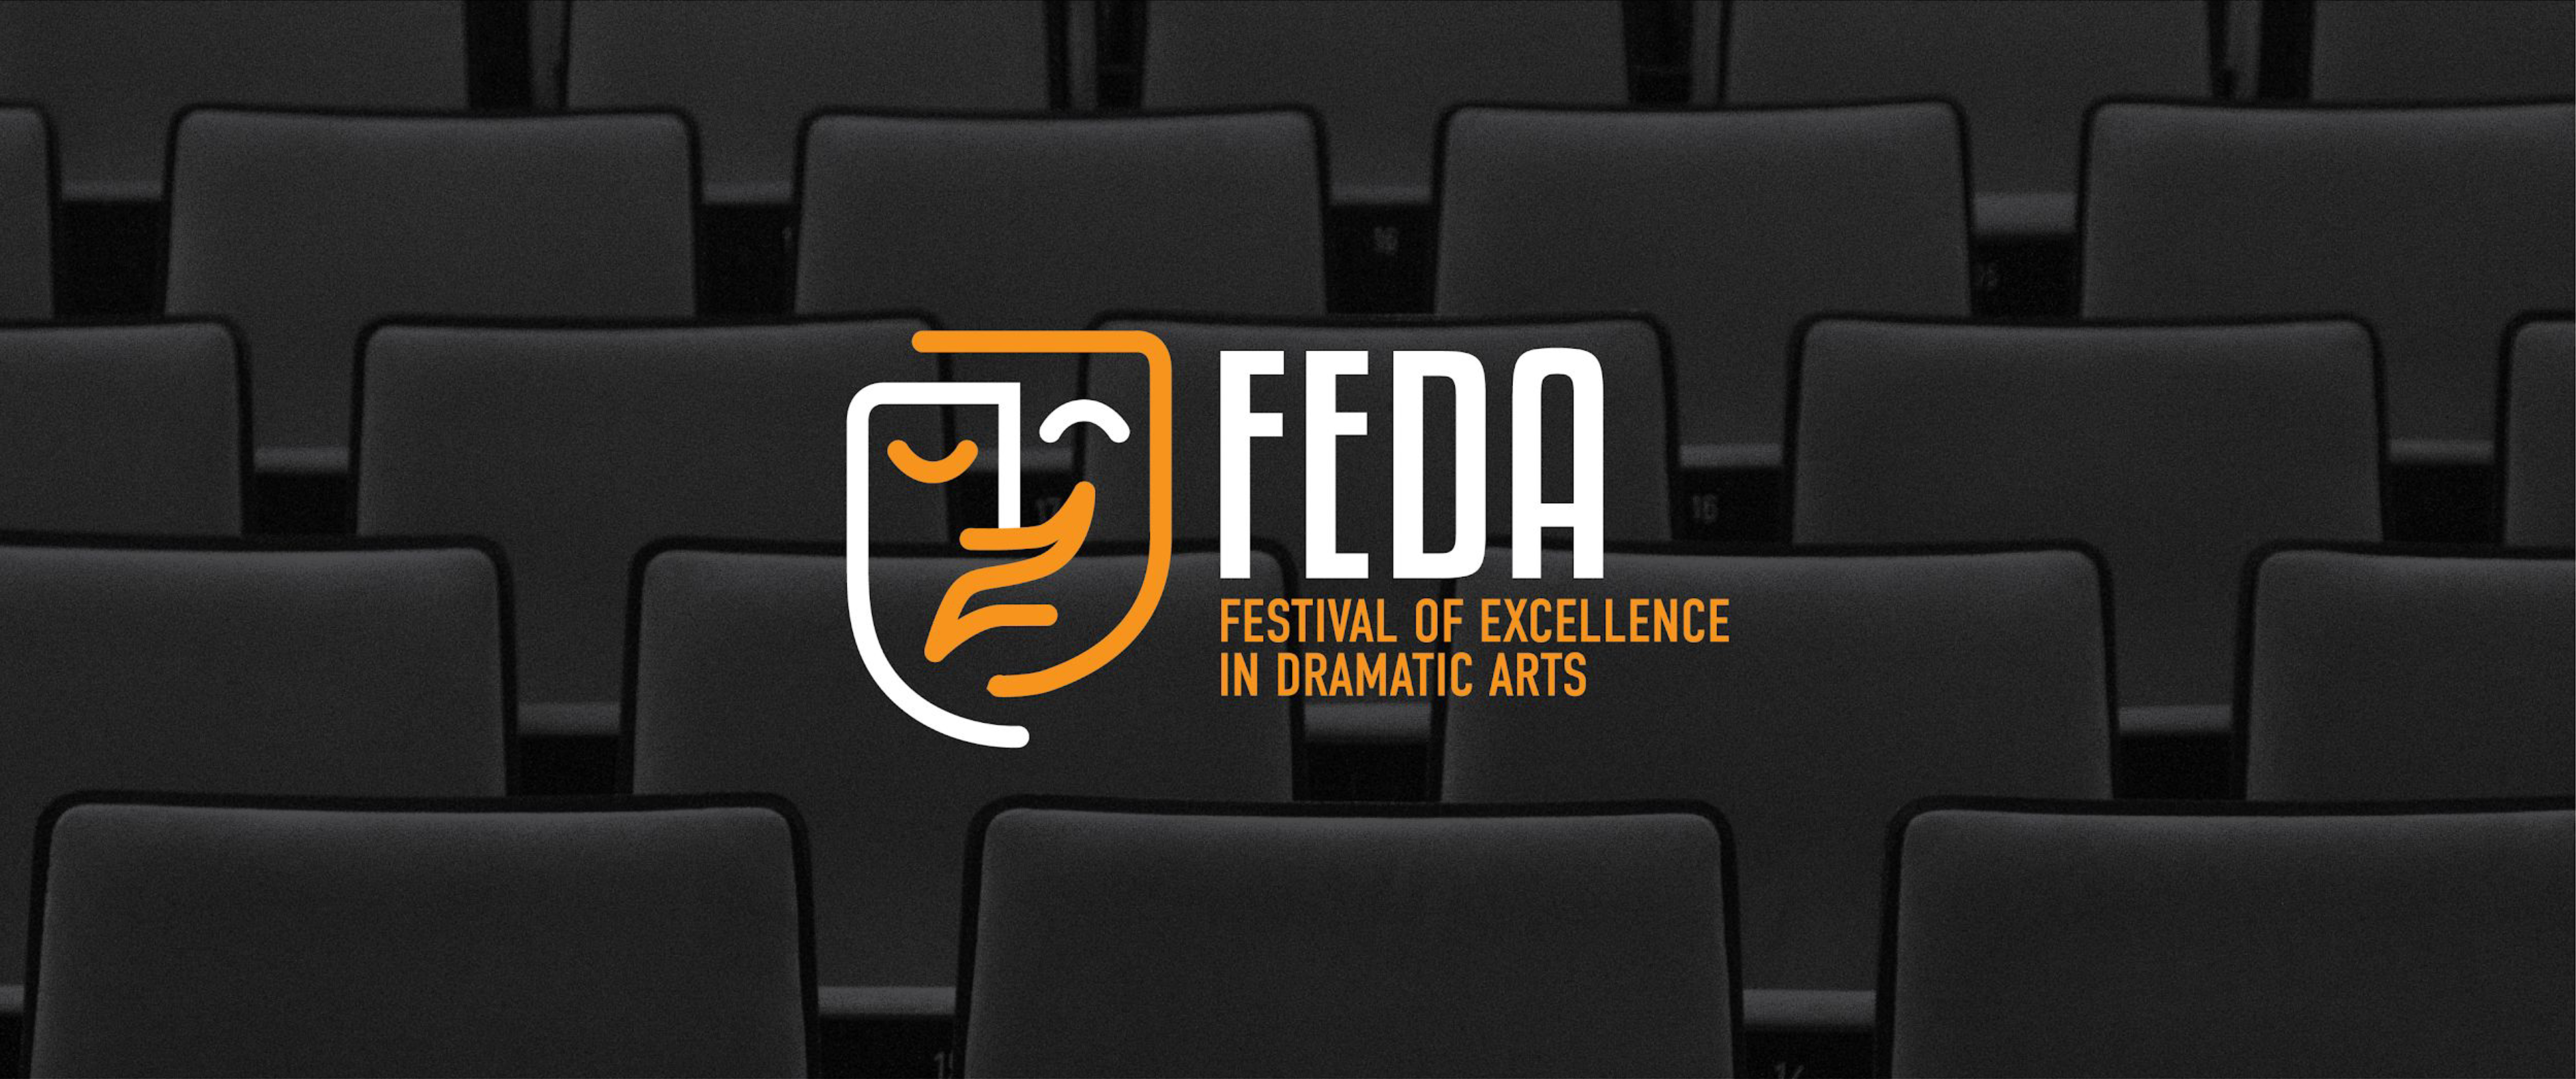 Feda Logo 3